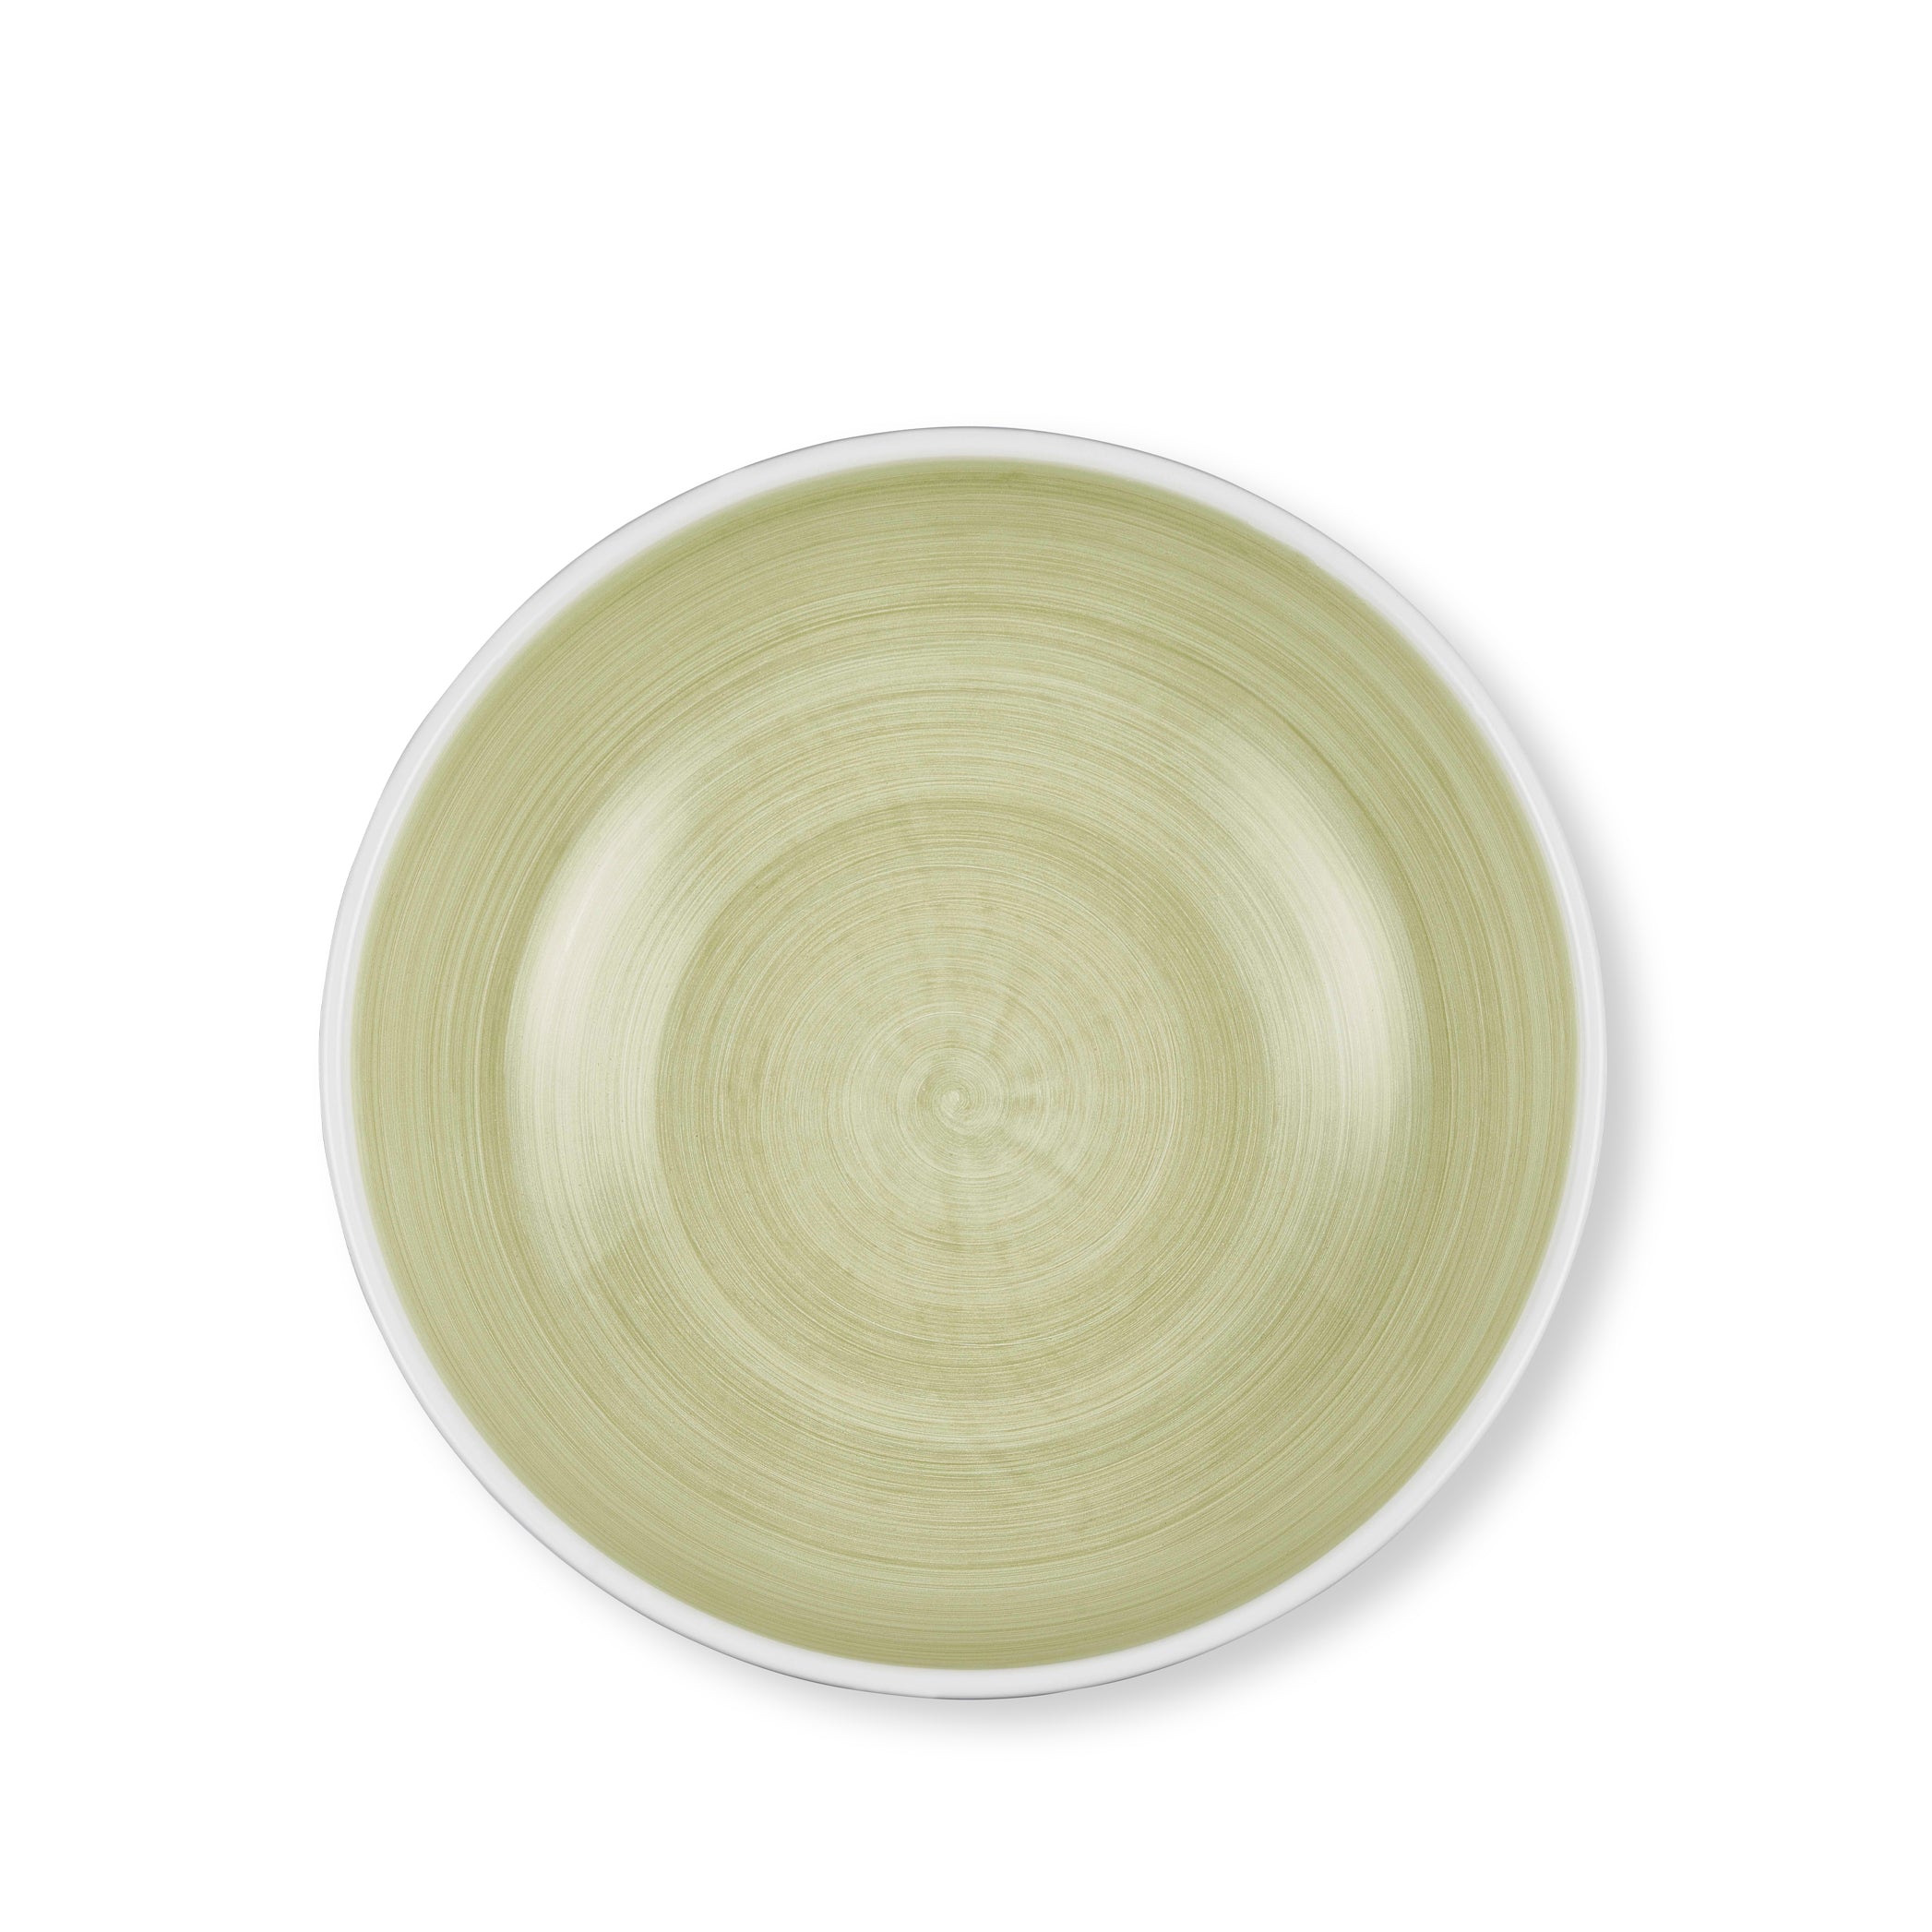 S&B 'Brushed' Ceramic Serving Bowl in Season Green, 30cm